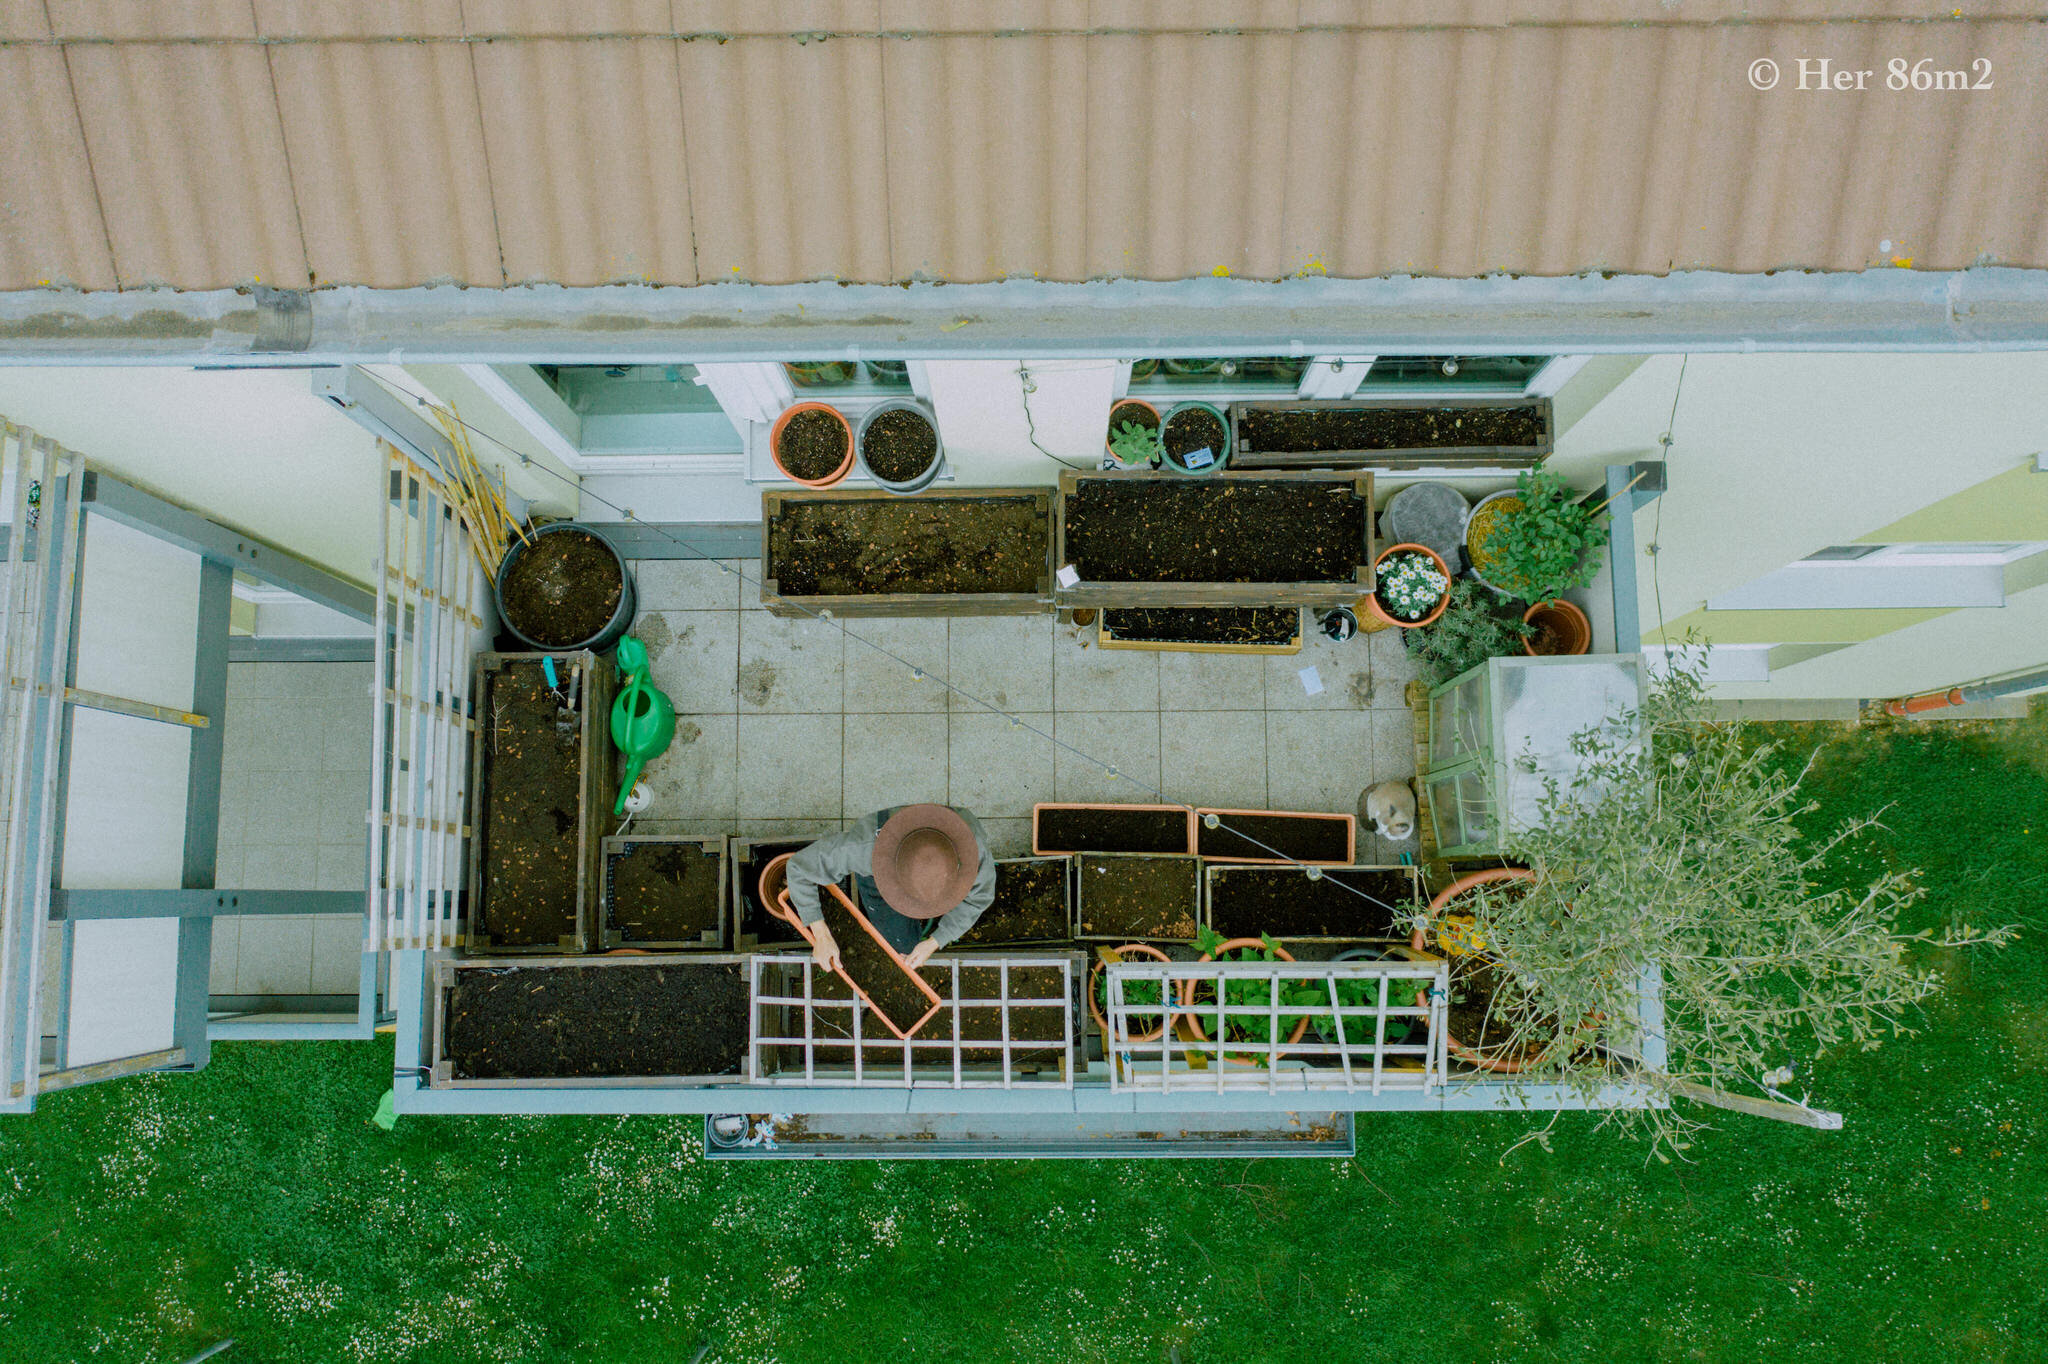 Her 86m2 - My 8m² Balcony Vegetable Garden | A Wonderful 200 Day Journey 9b.jpg